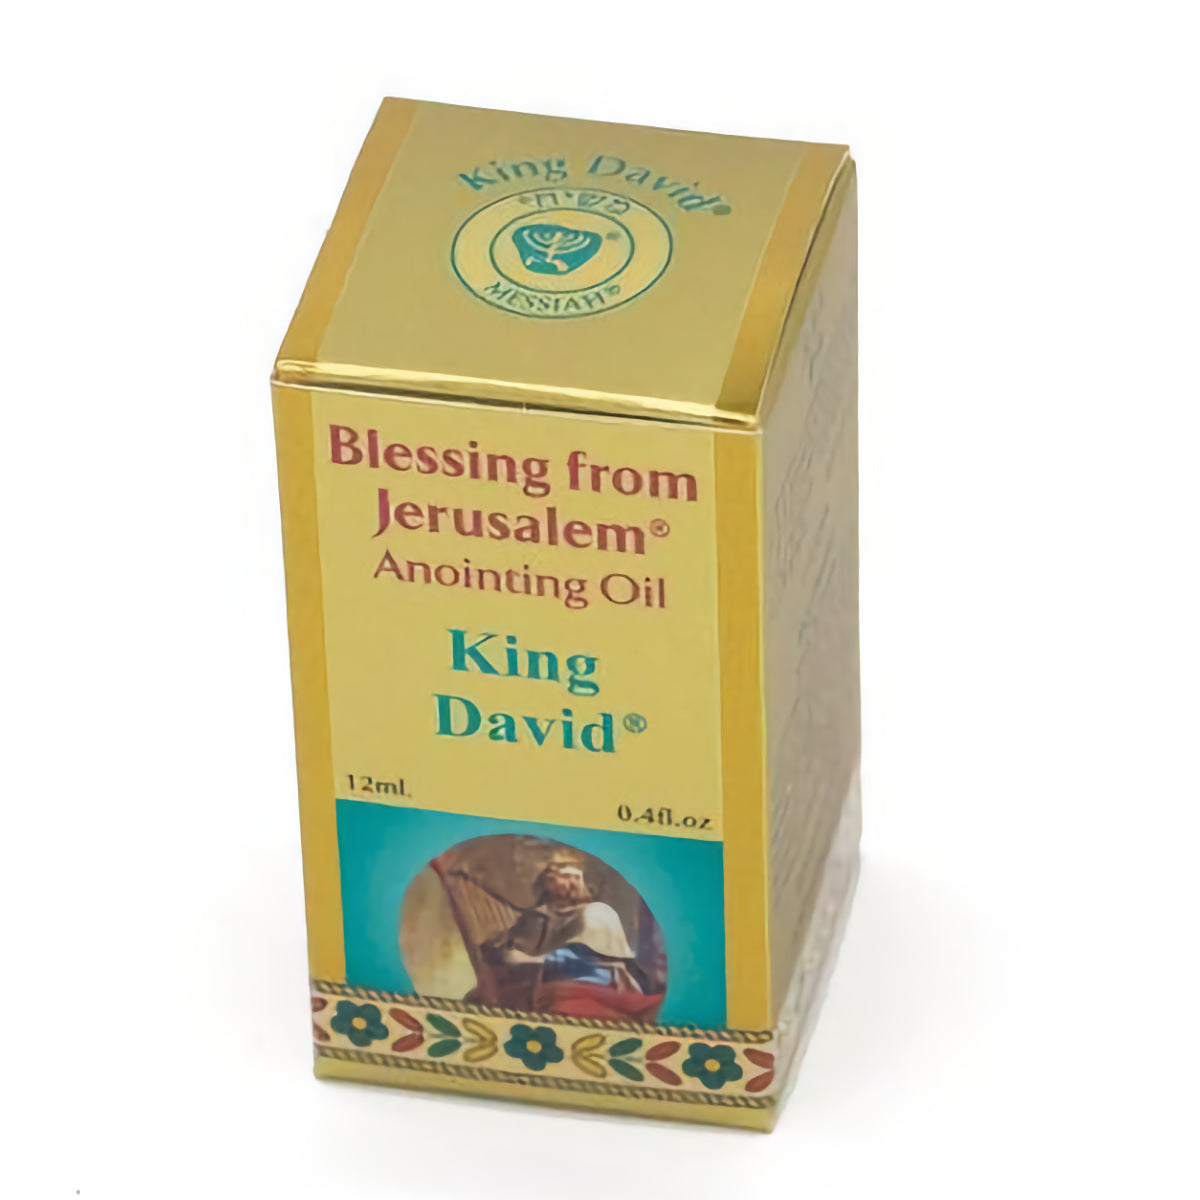 Gold Anointing Oil King David 12ml/0.4 oz From Holyland Jerusalem